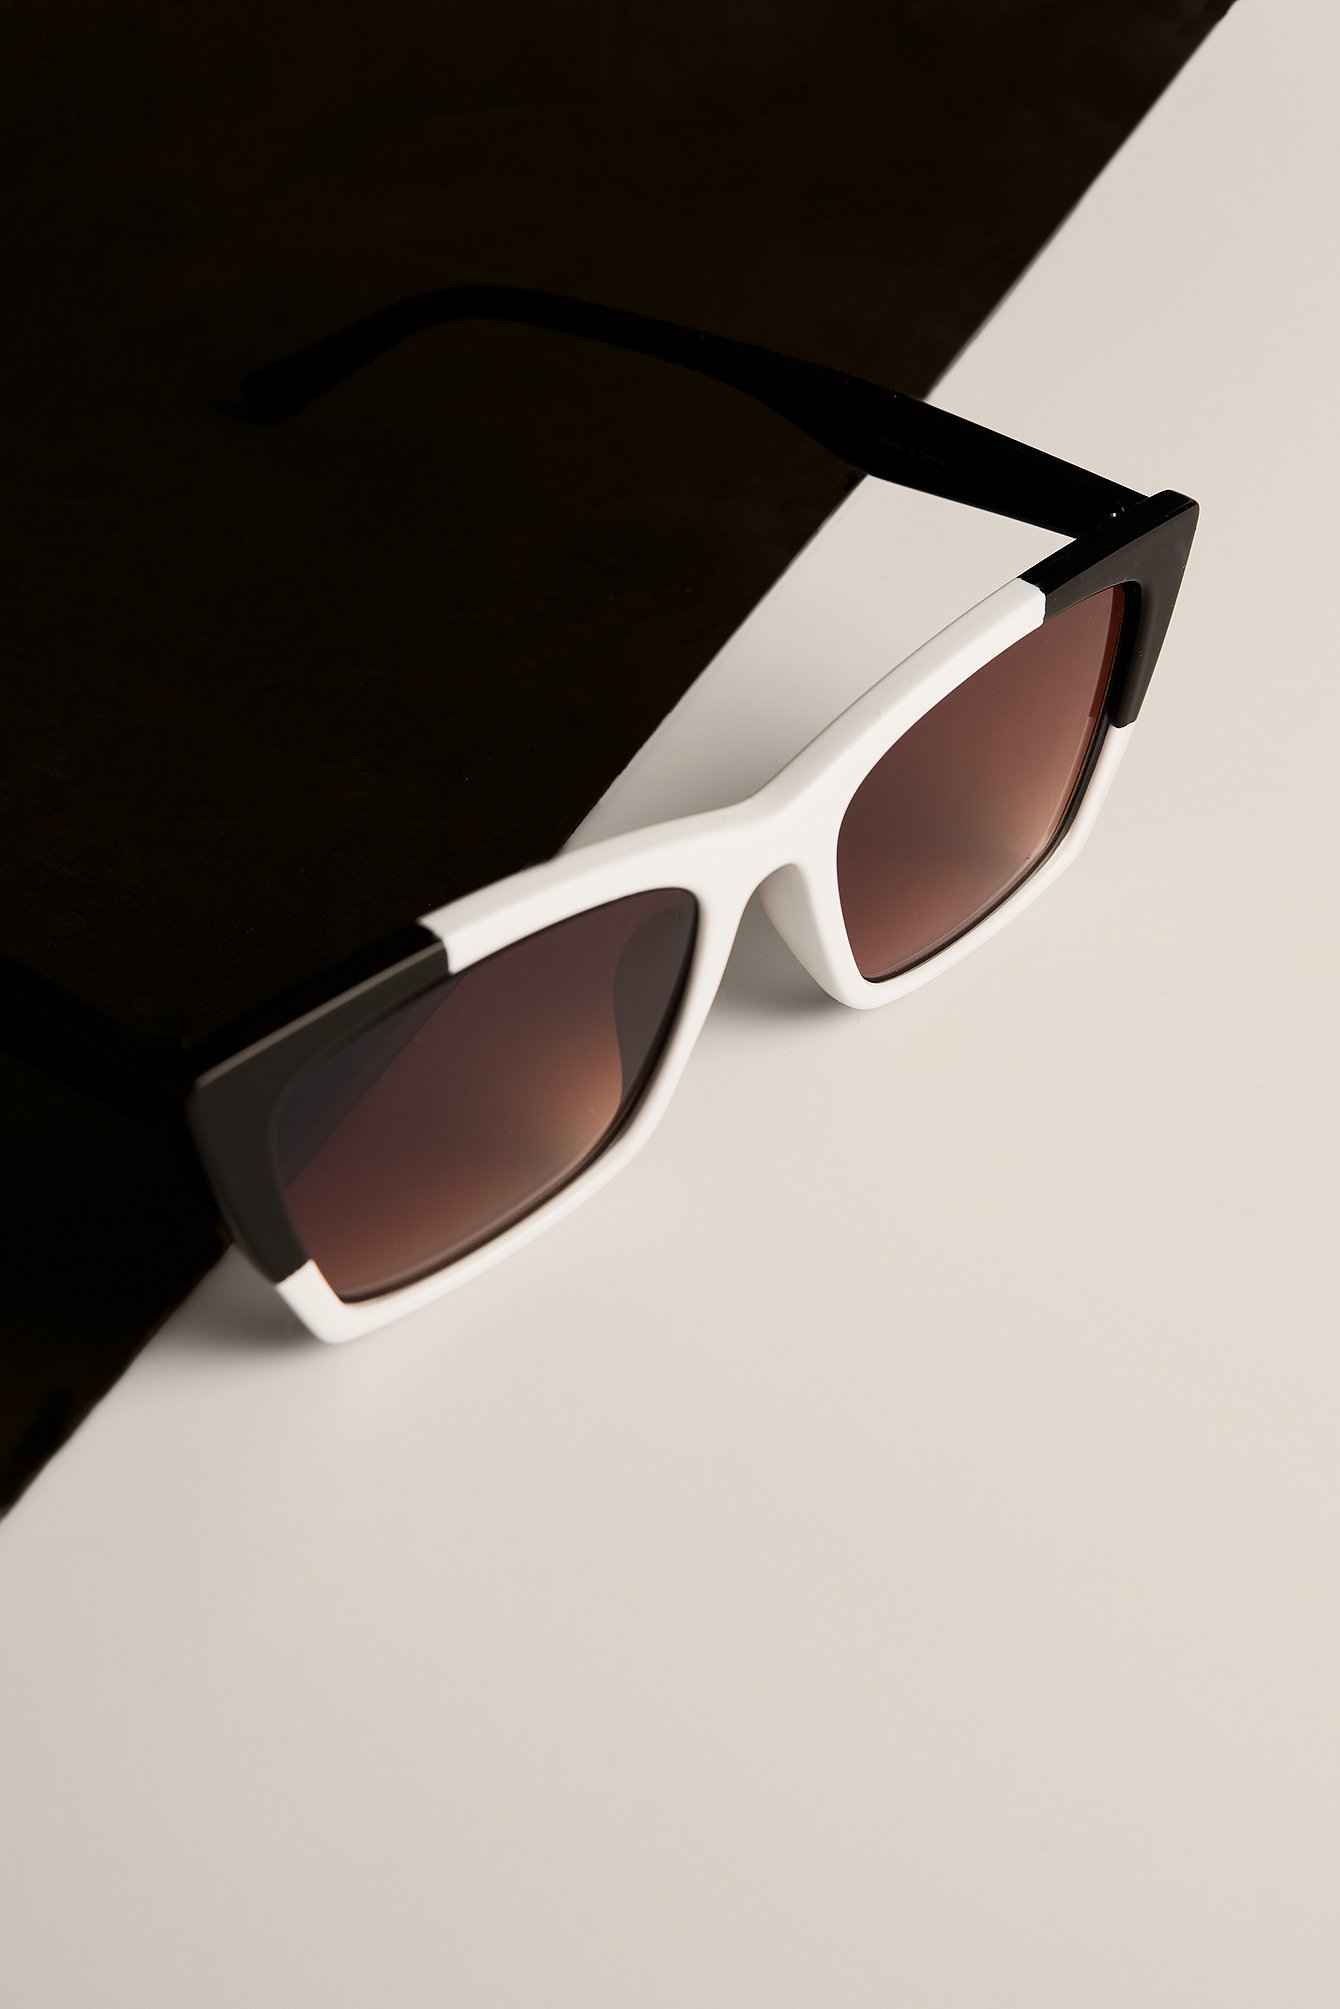 Black/White Spidse solbriller i to farver